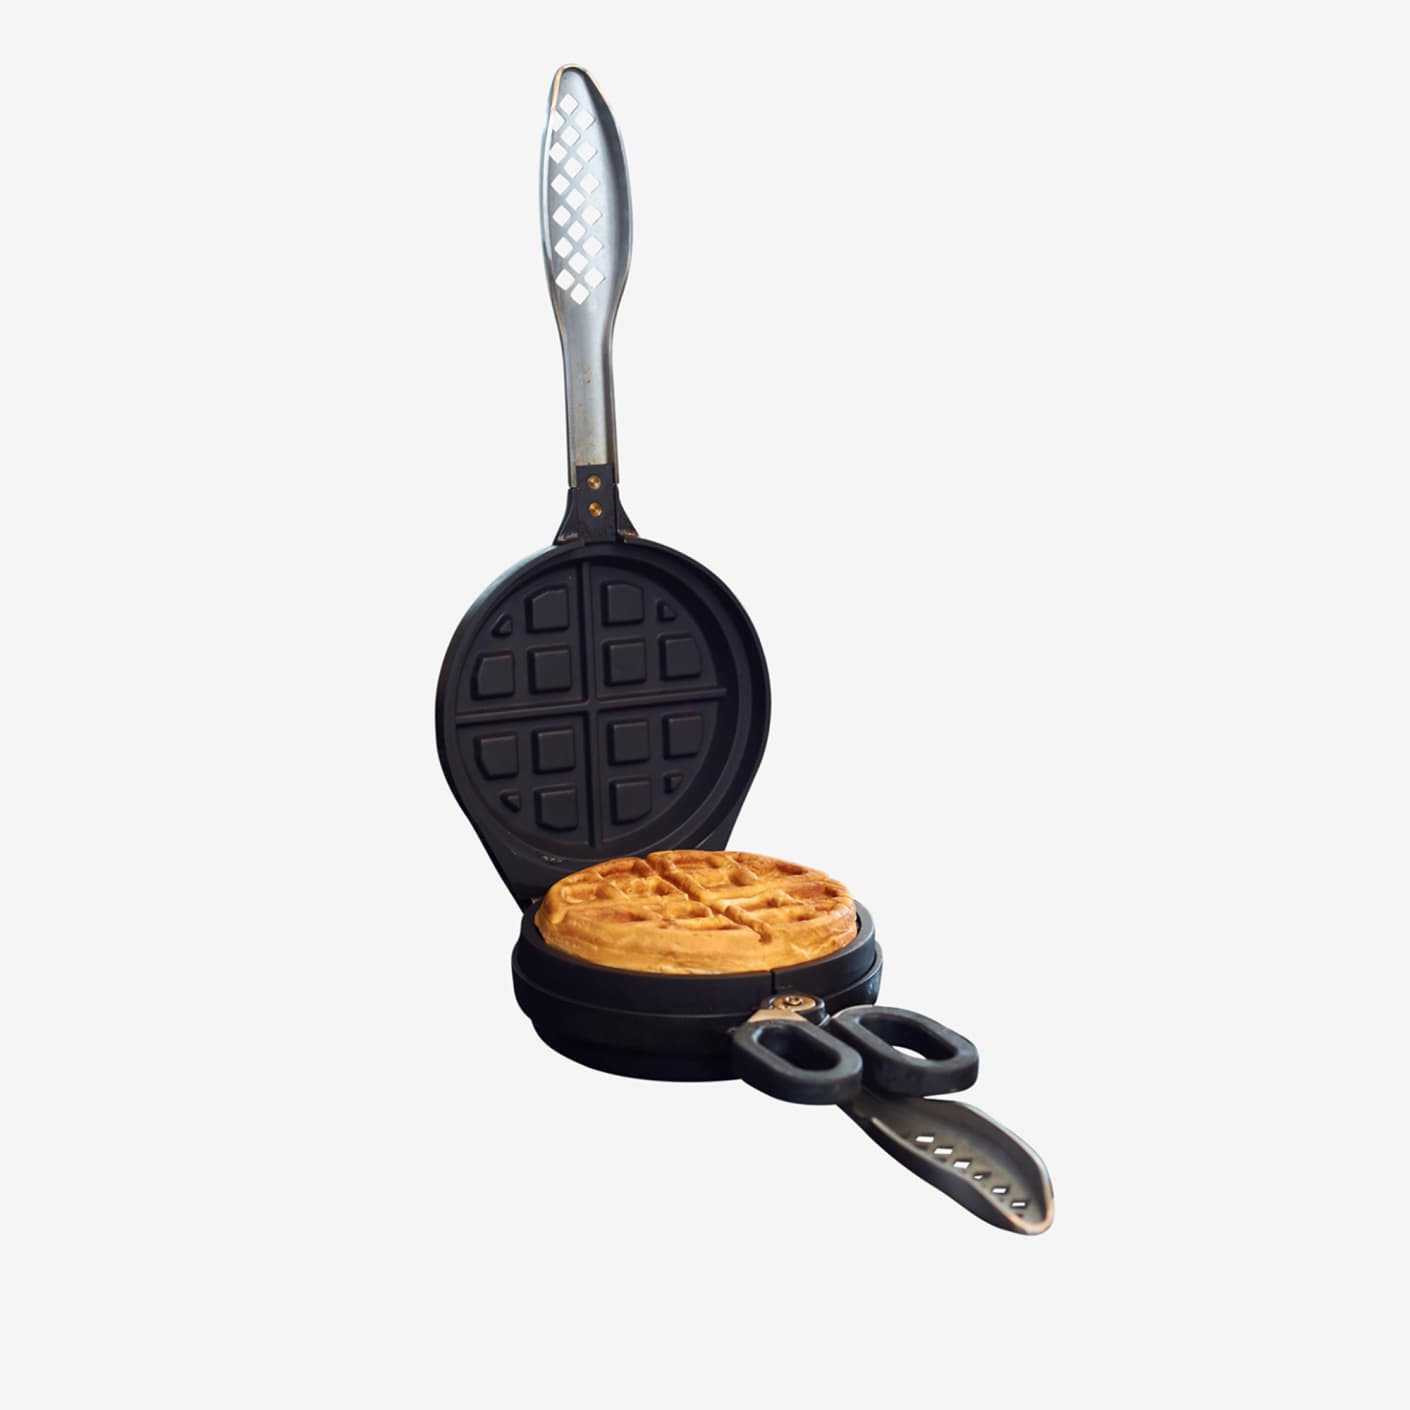 Wonderffle - Stuffed Waffle Iron